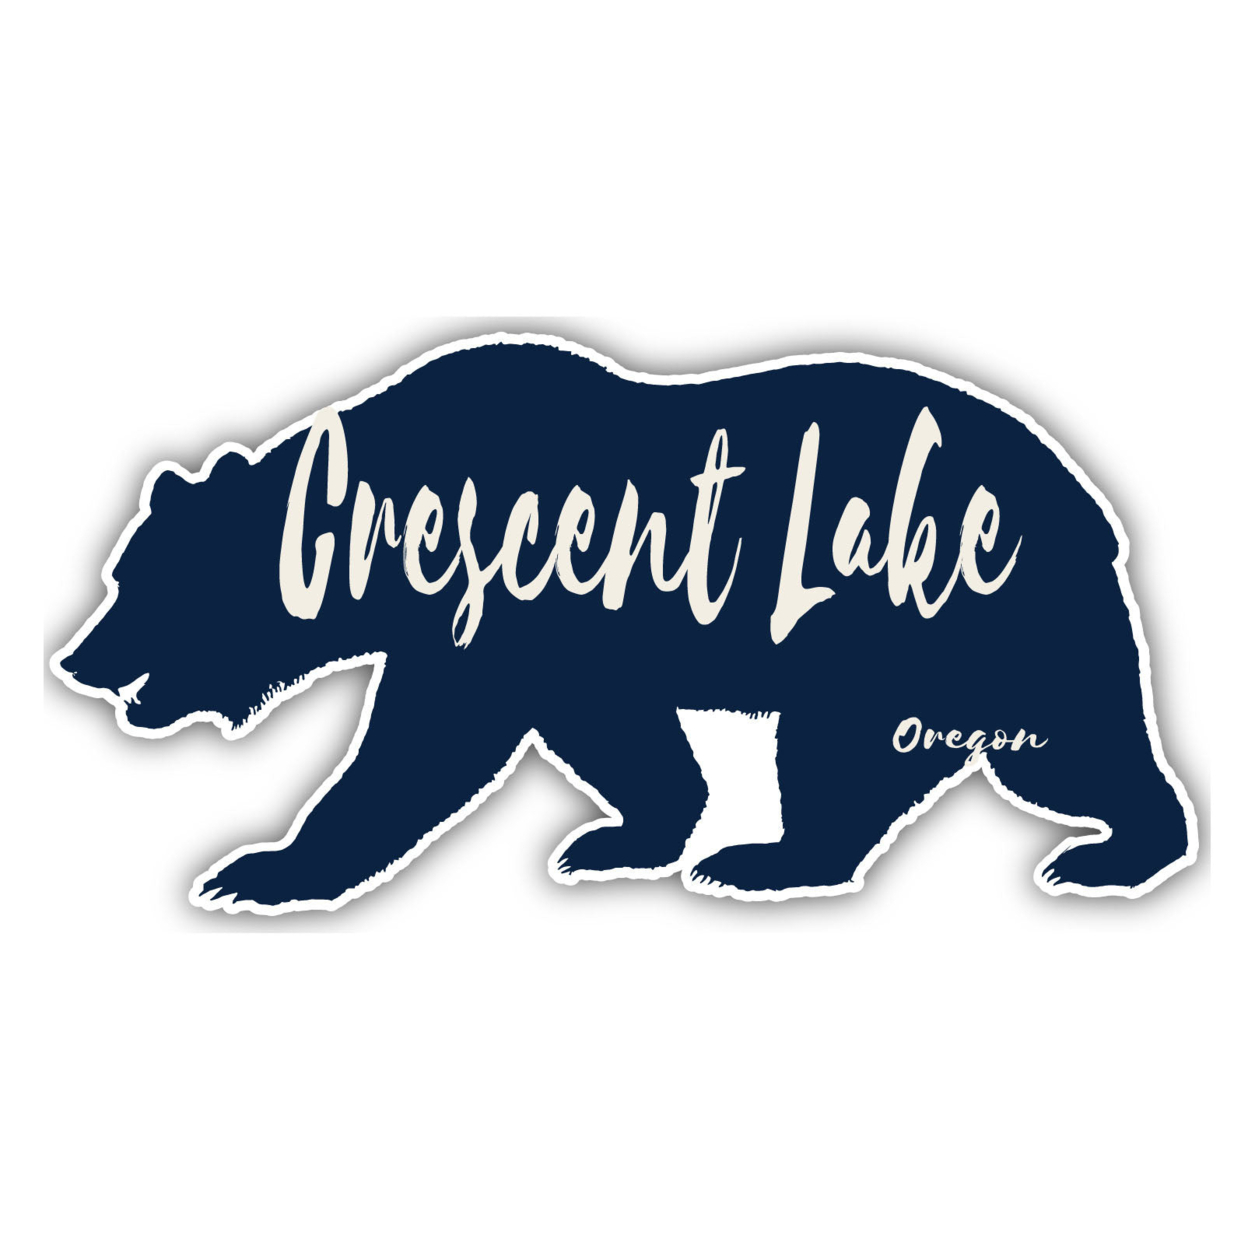 Crescent Lake Oregon Souvenir Decorative Stickers (Choose Theme And Size) - Single Unit, 6-Inch, Tent